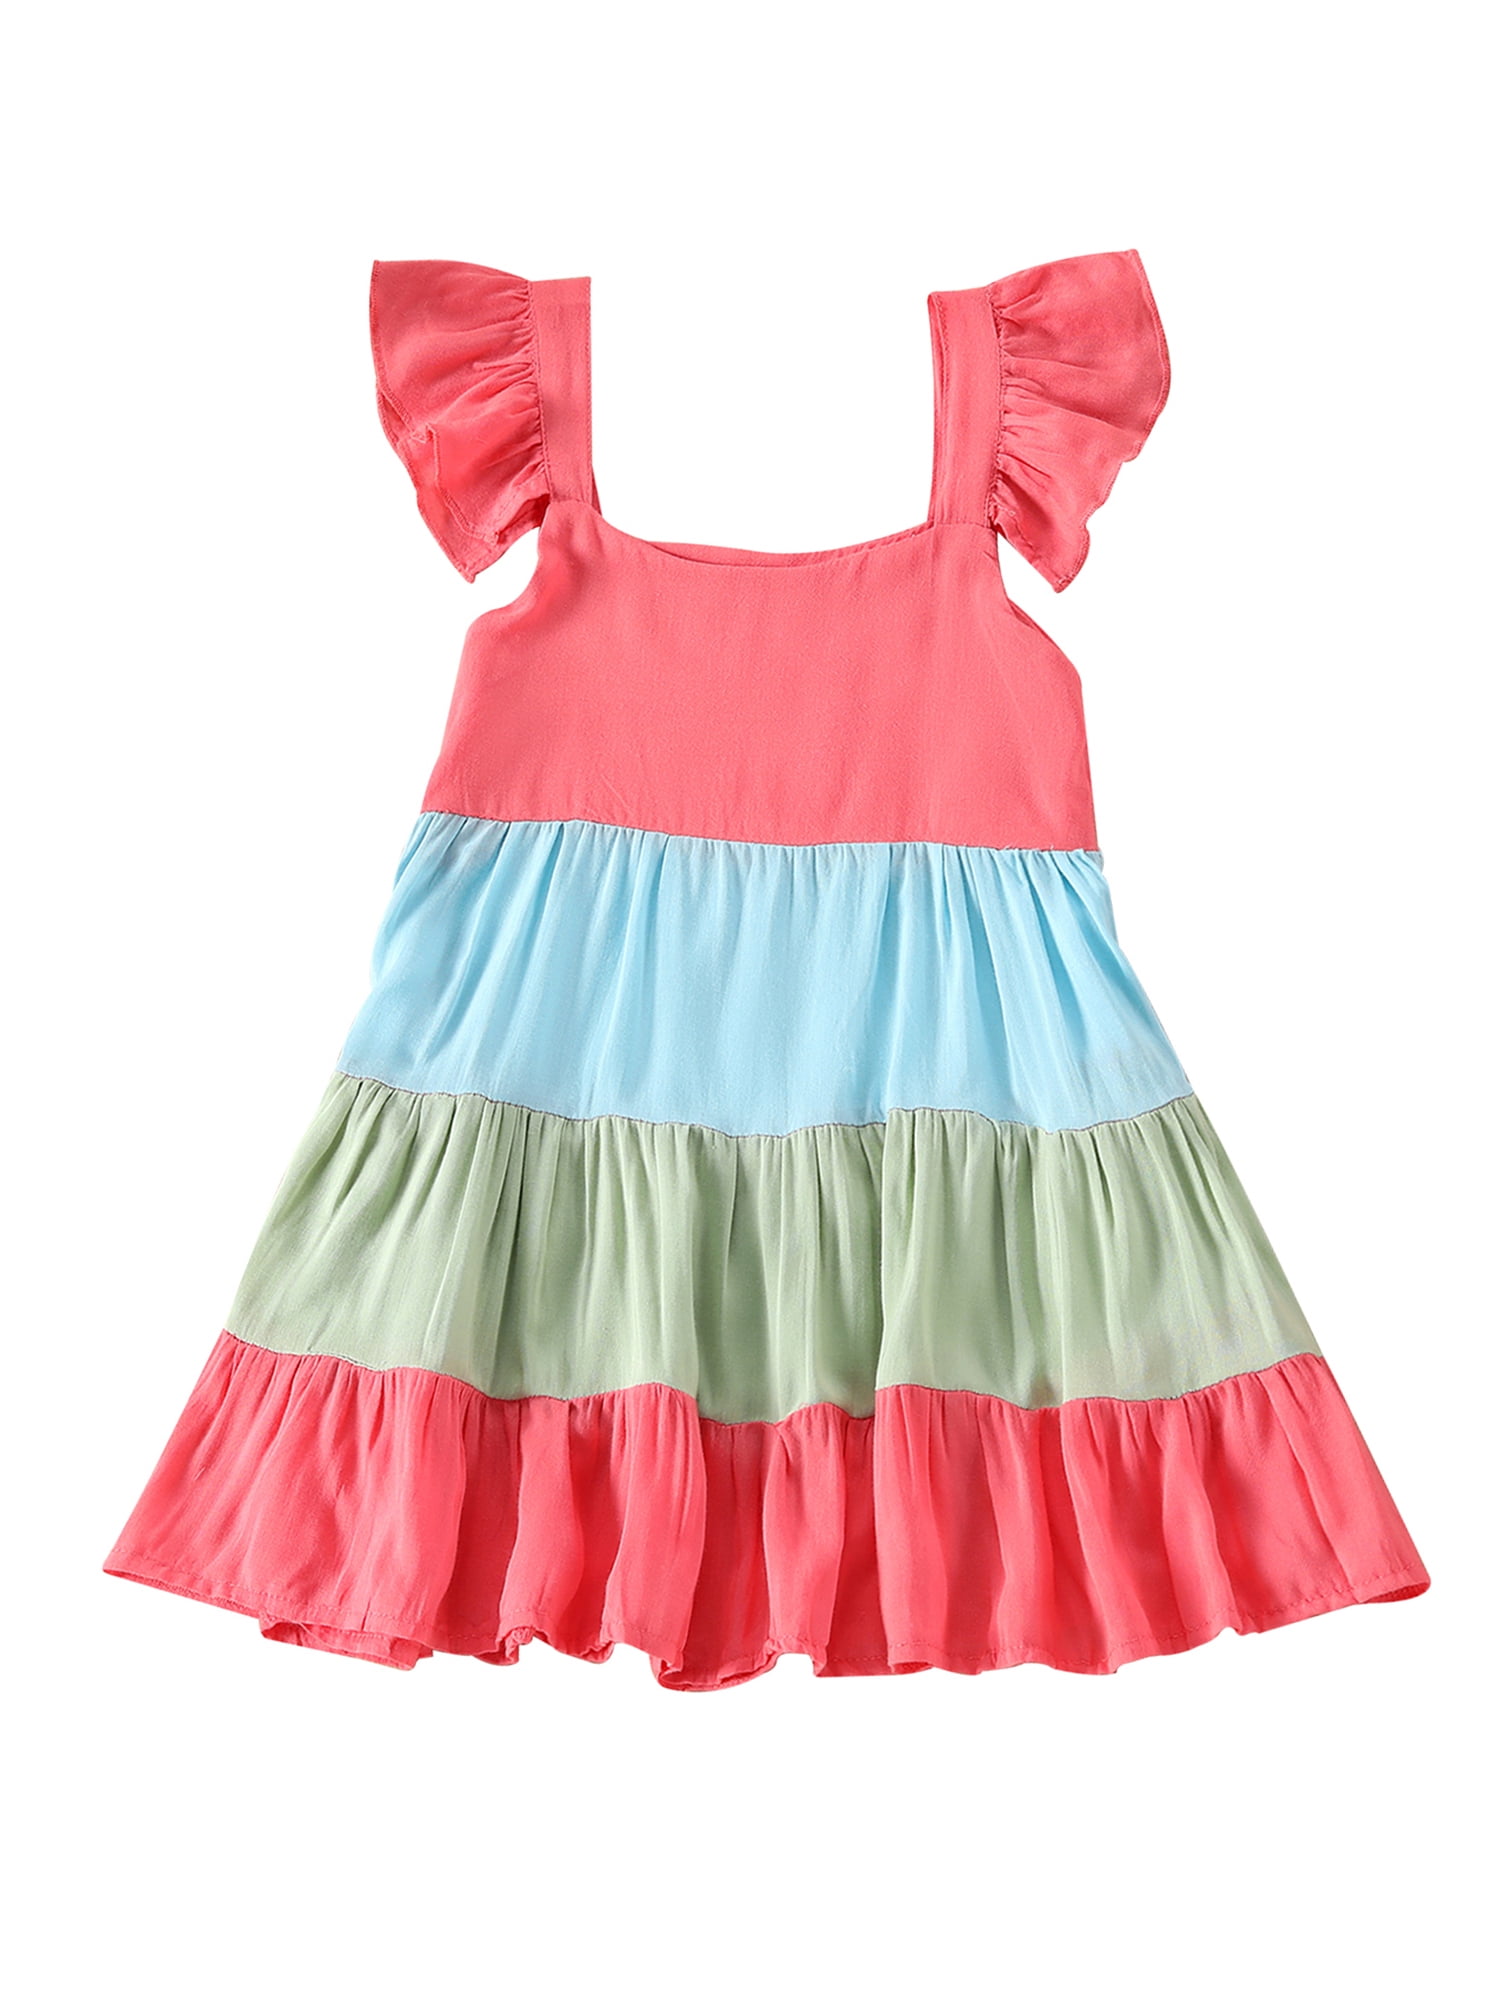 Girls Sundress for 1-6 YearsToddler Kids Baby Girls Rainbow Striped Patchwork Princess Party Dress Sundress 